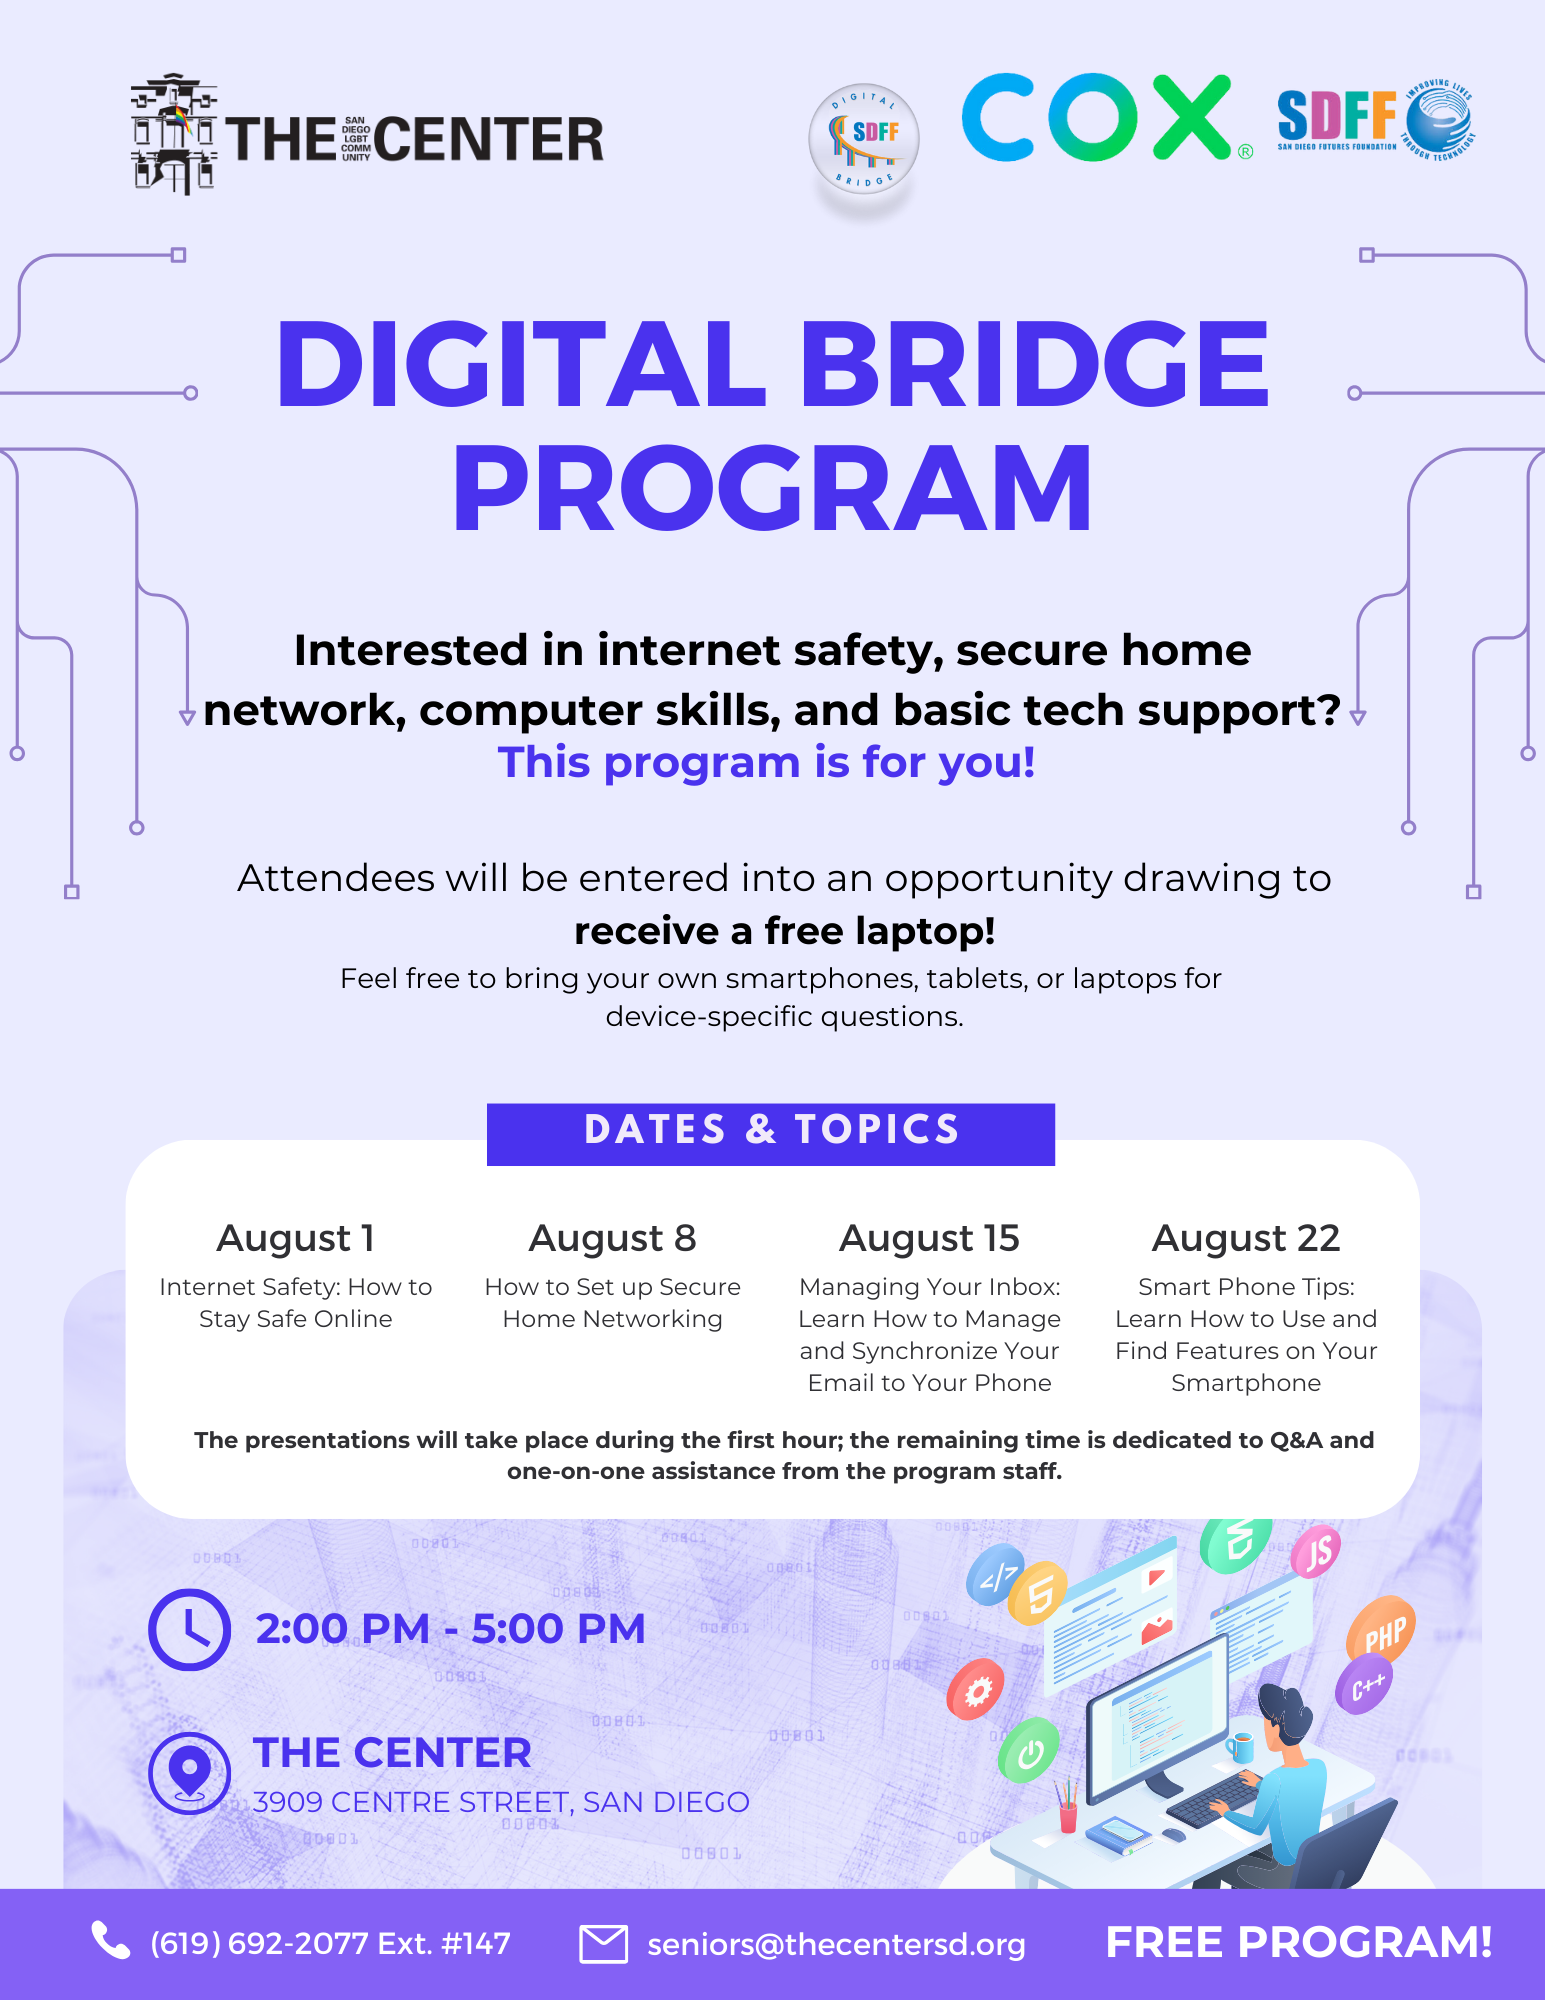 <a href="https://thecentersd.org/events/digital-bridge-program/">Learn more</a>